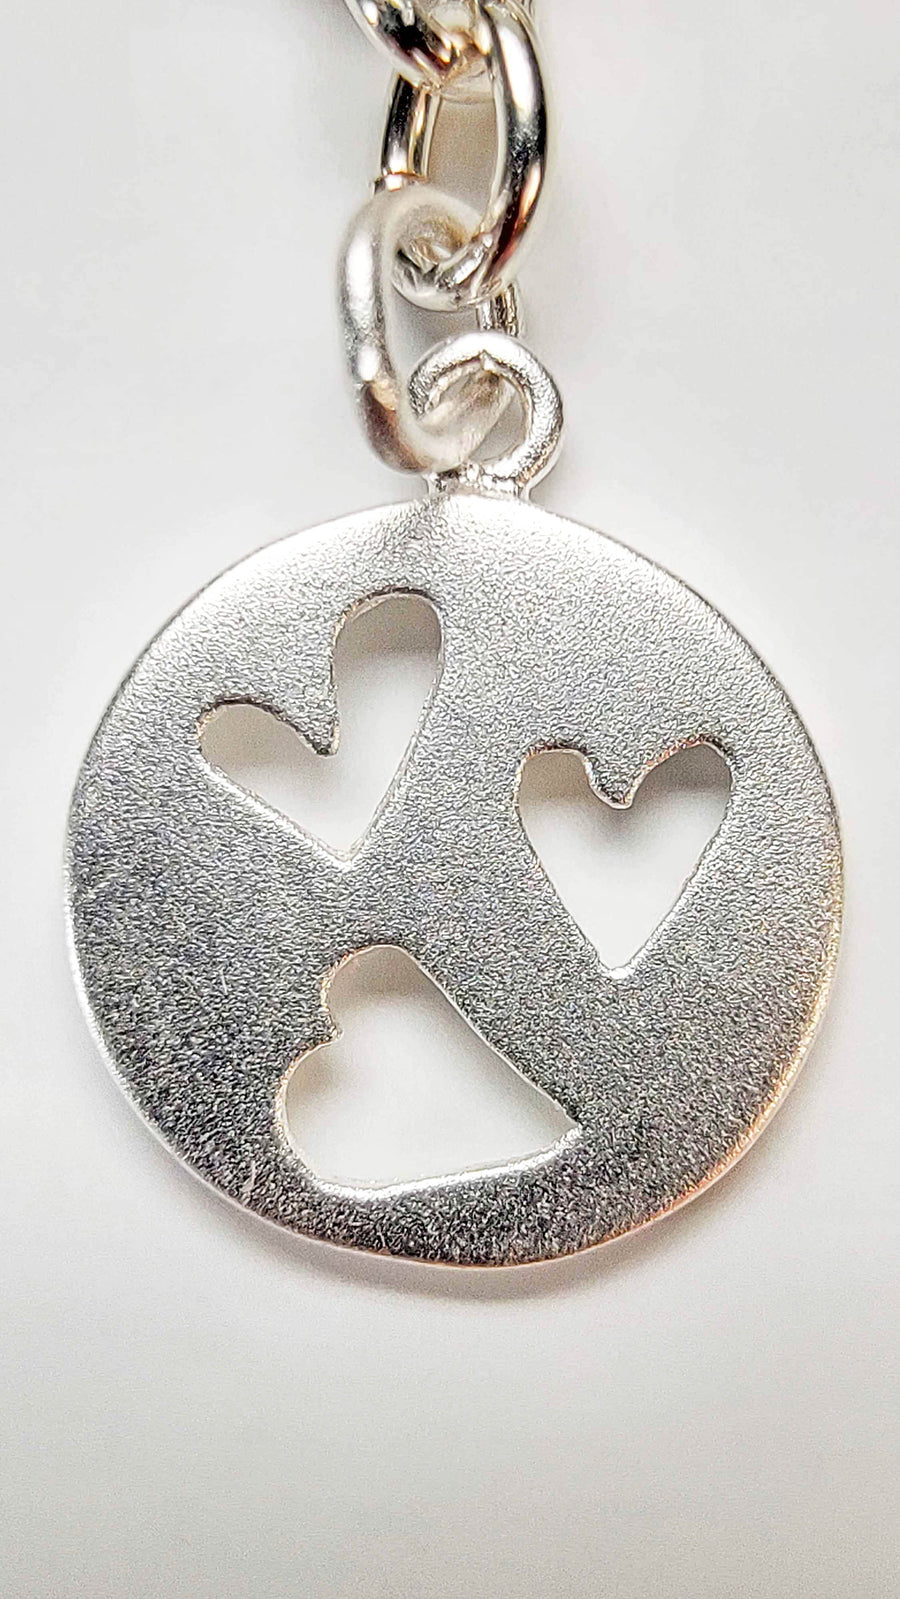 Sterling Silver Heart Charm Handmade Ring